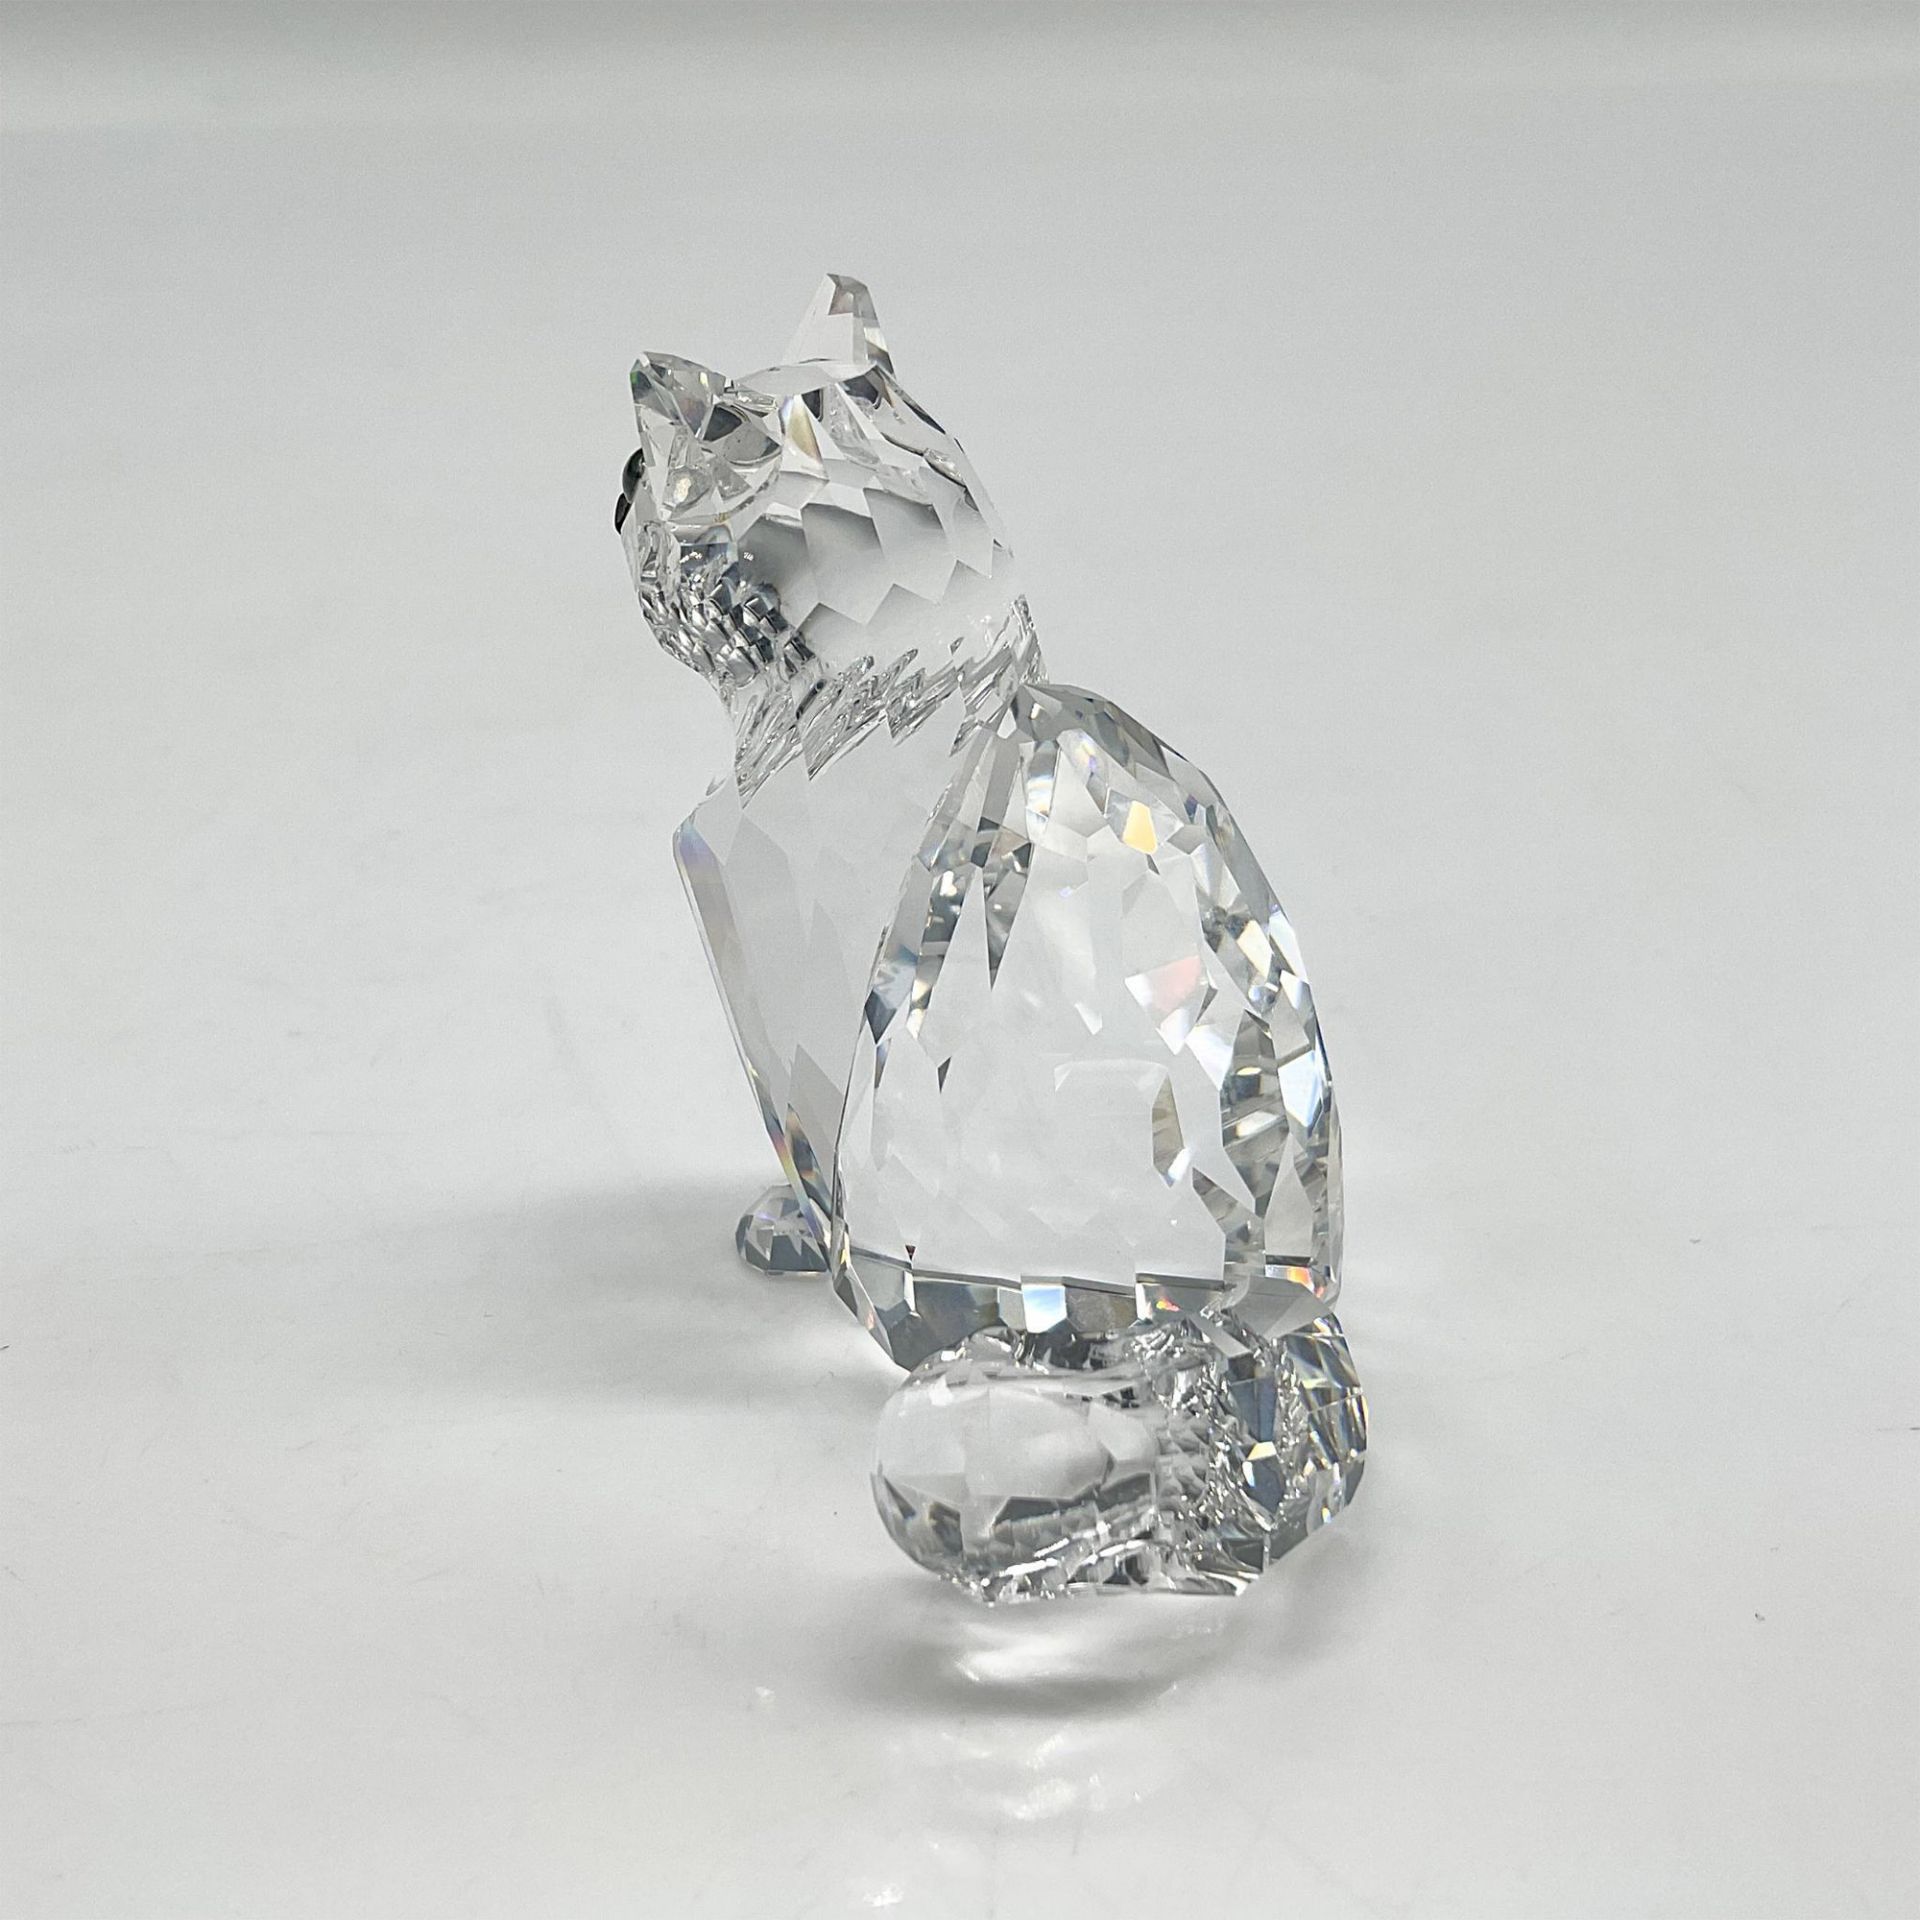 Swarovski Silver Crystal Figurine, Sitting Cat - Image 2 of 4